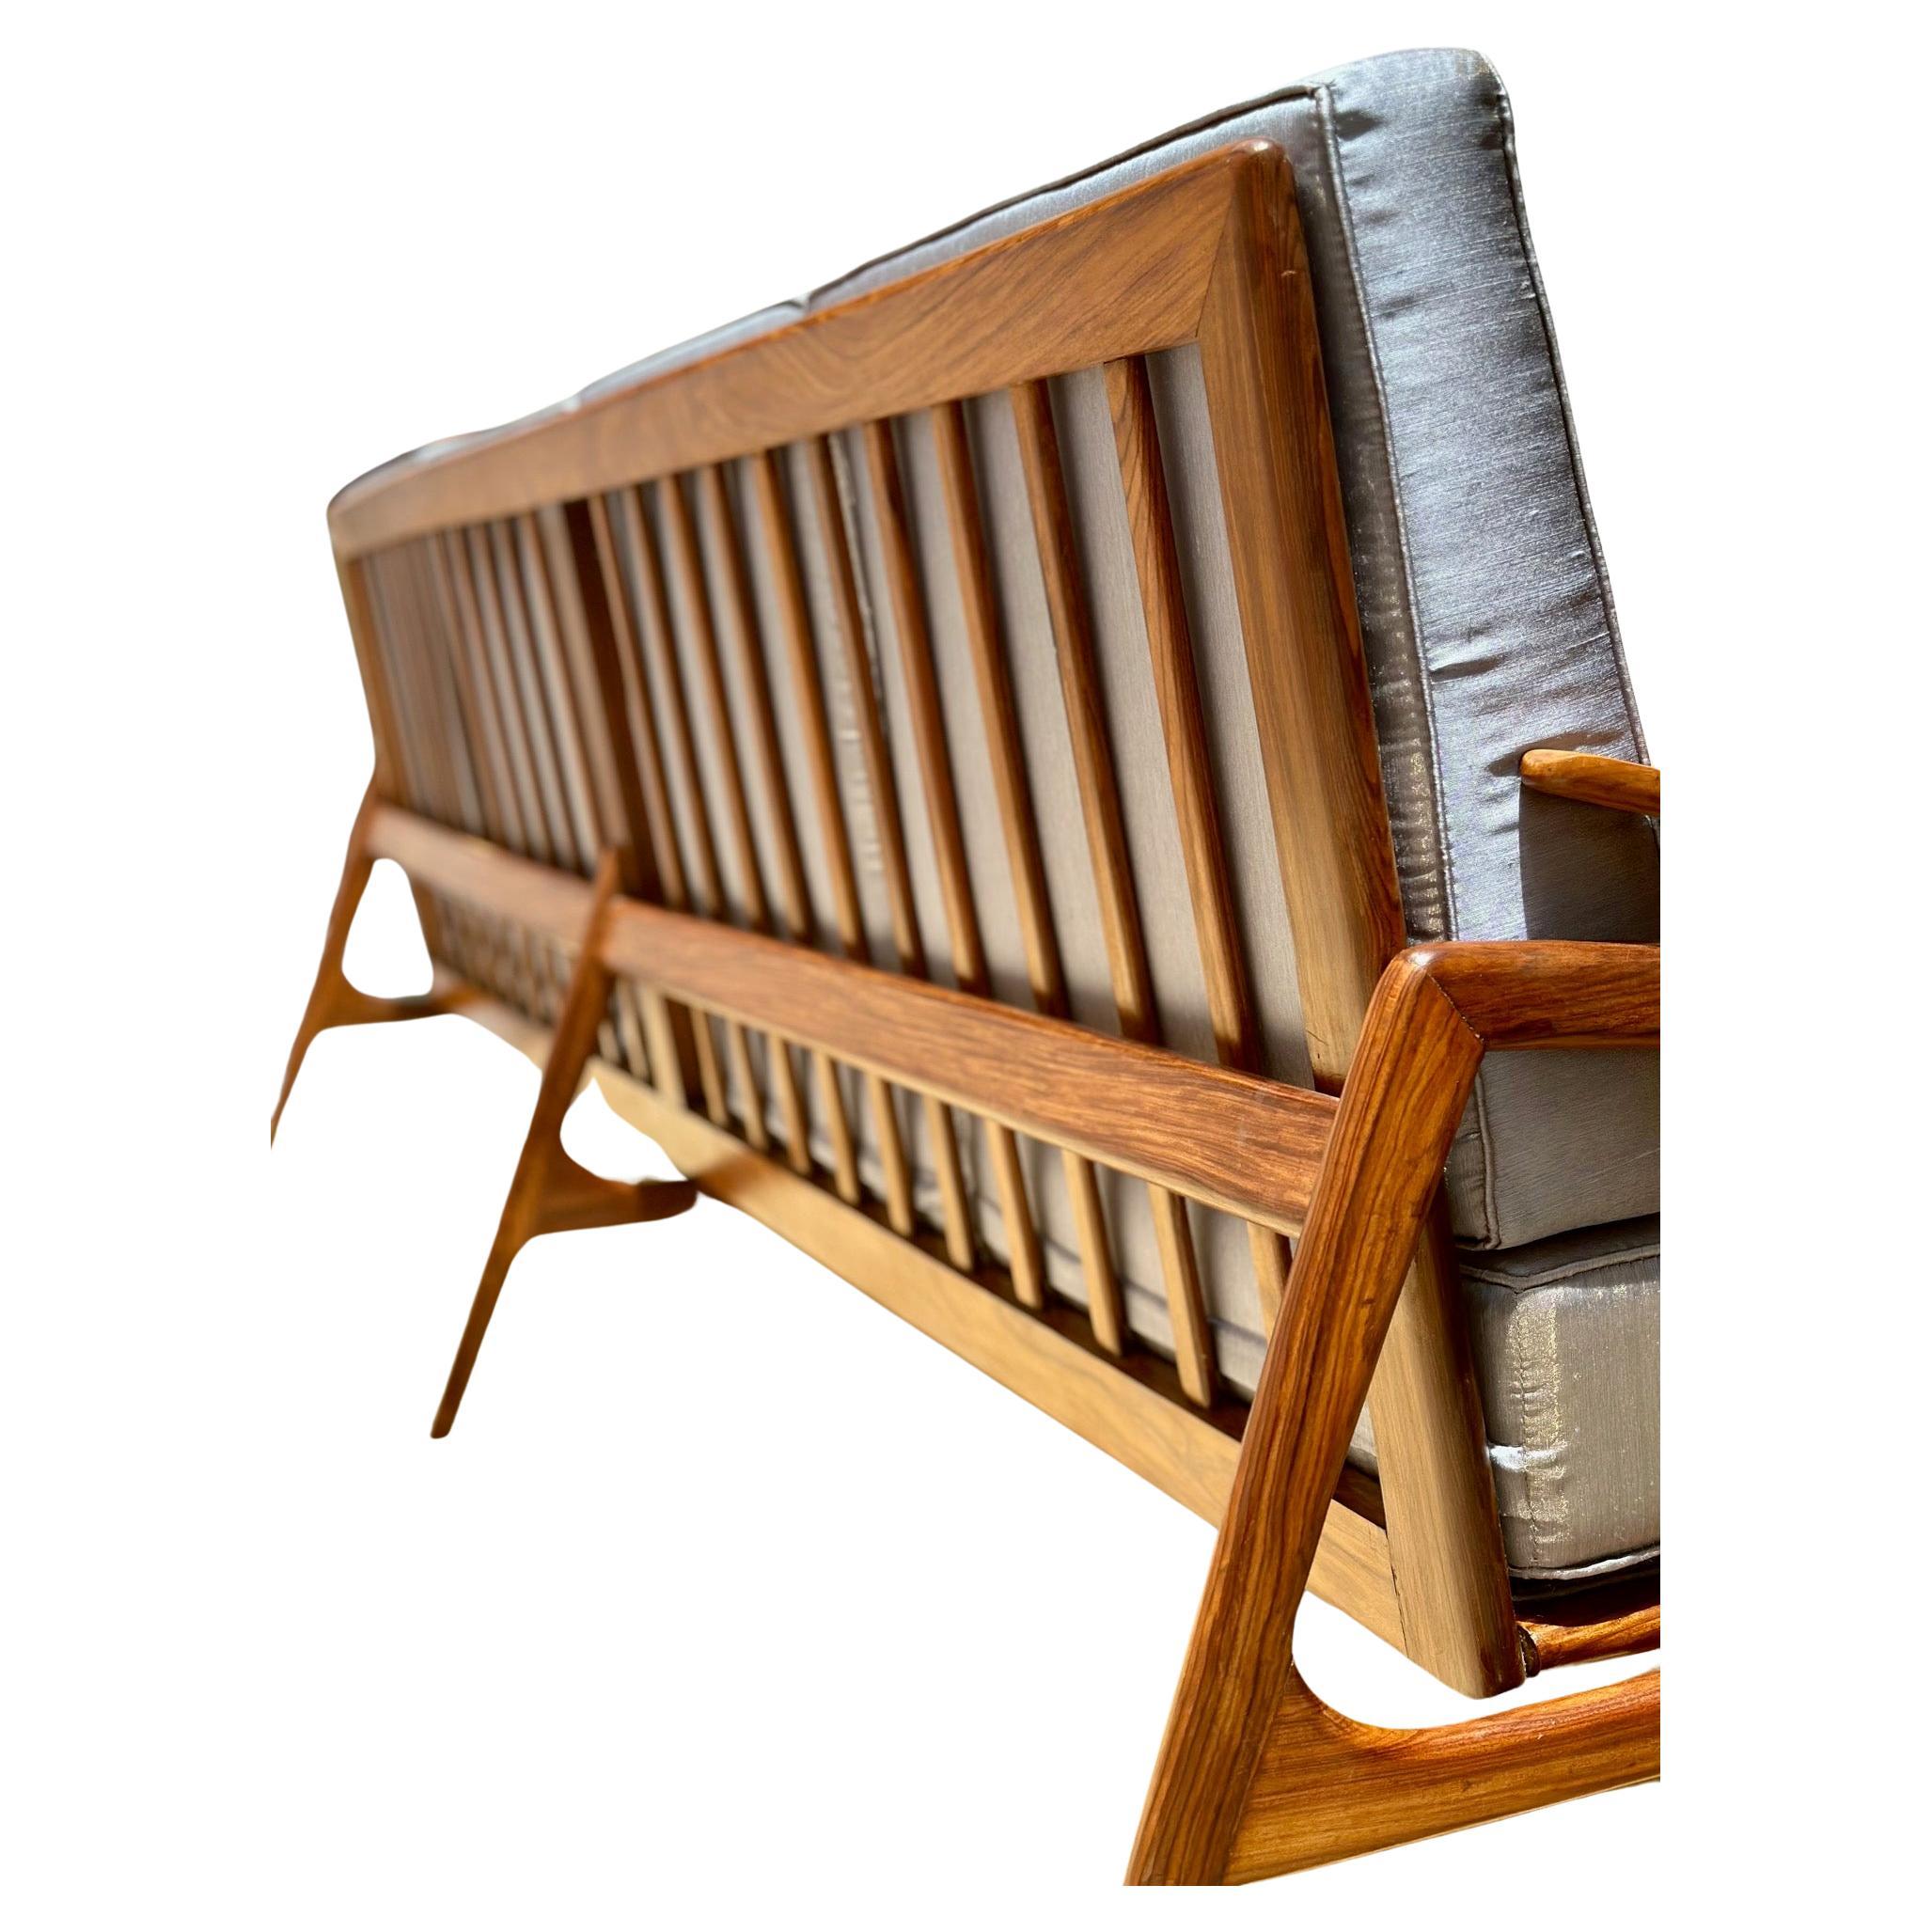 Giuseppe Scapinelli. The Modernity Sofa in Caviúna Wood and Silk Upholstery (Canapé moderne du milieu du siècle en bois de caviúna et tissu de soie)